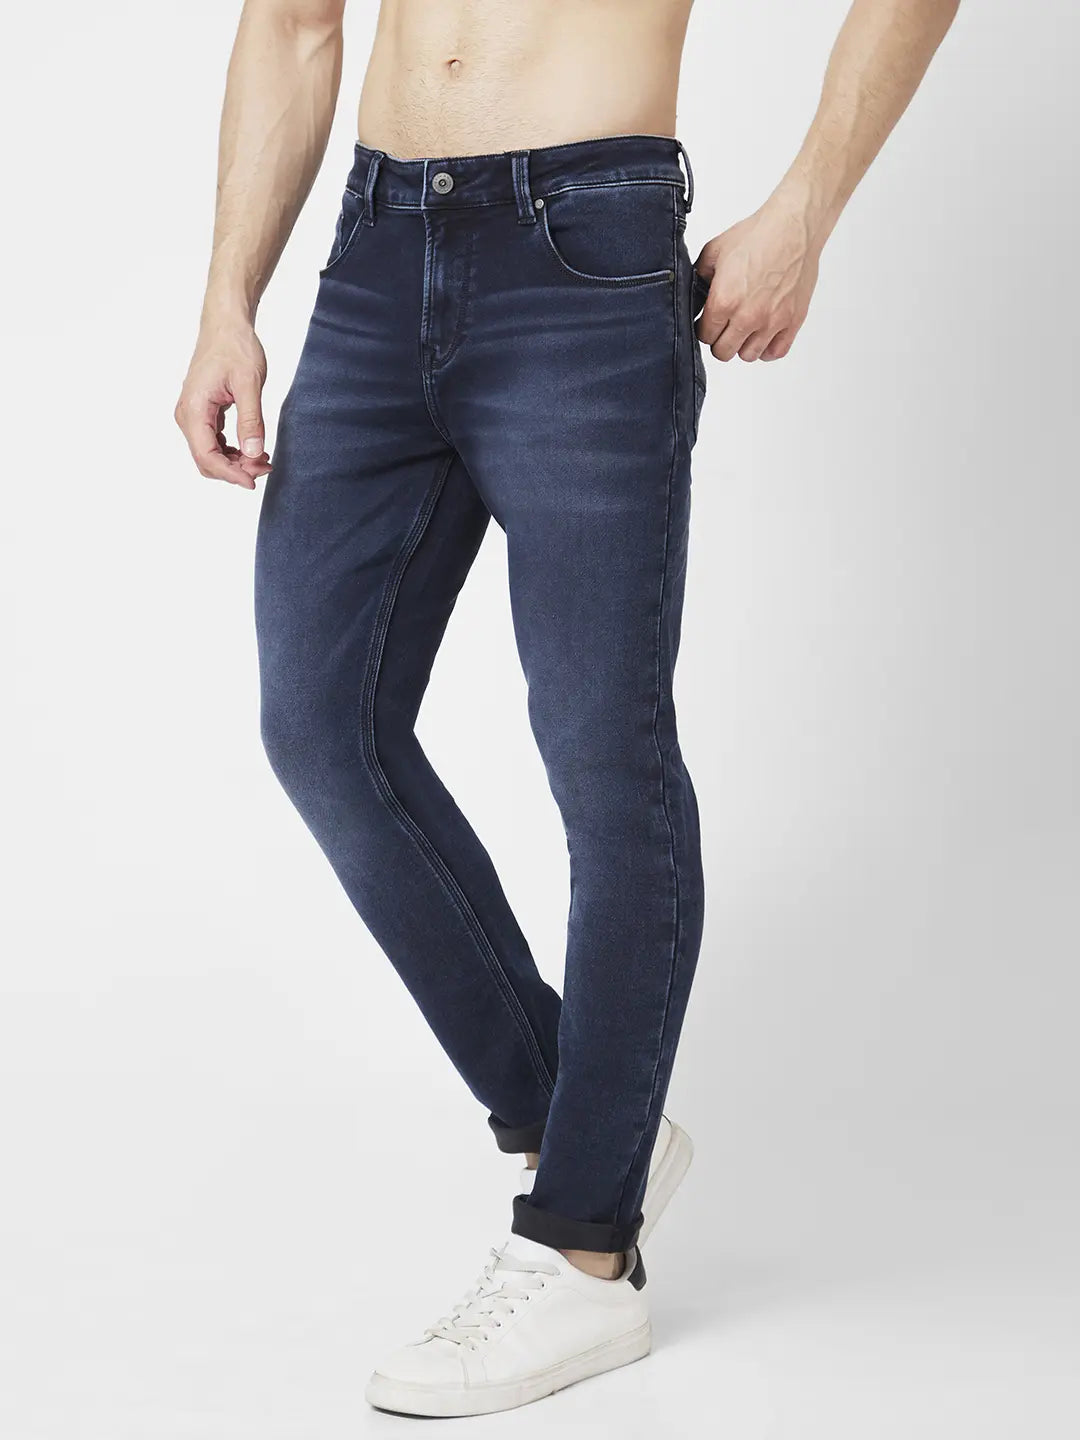 Spykar Men Black Indigo Cotton Stretch Slim Fit Narrow Length Clean Look Low Rise Jeans (Skinny)